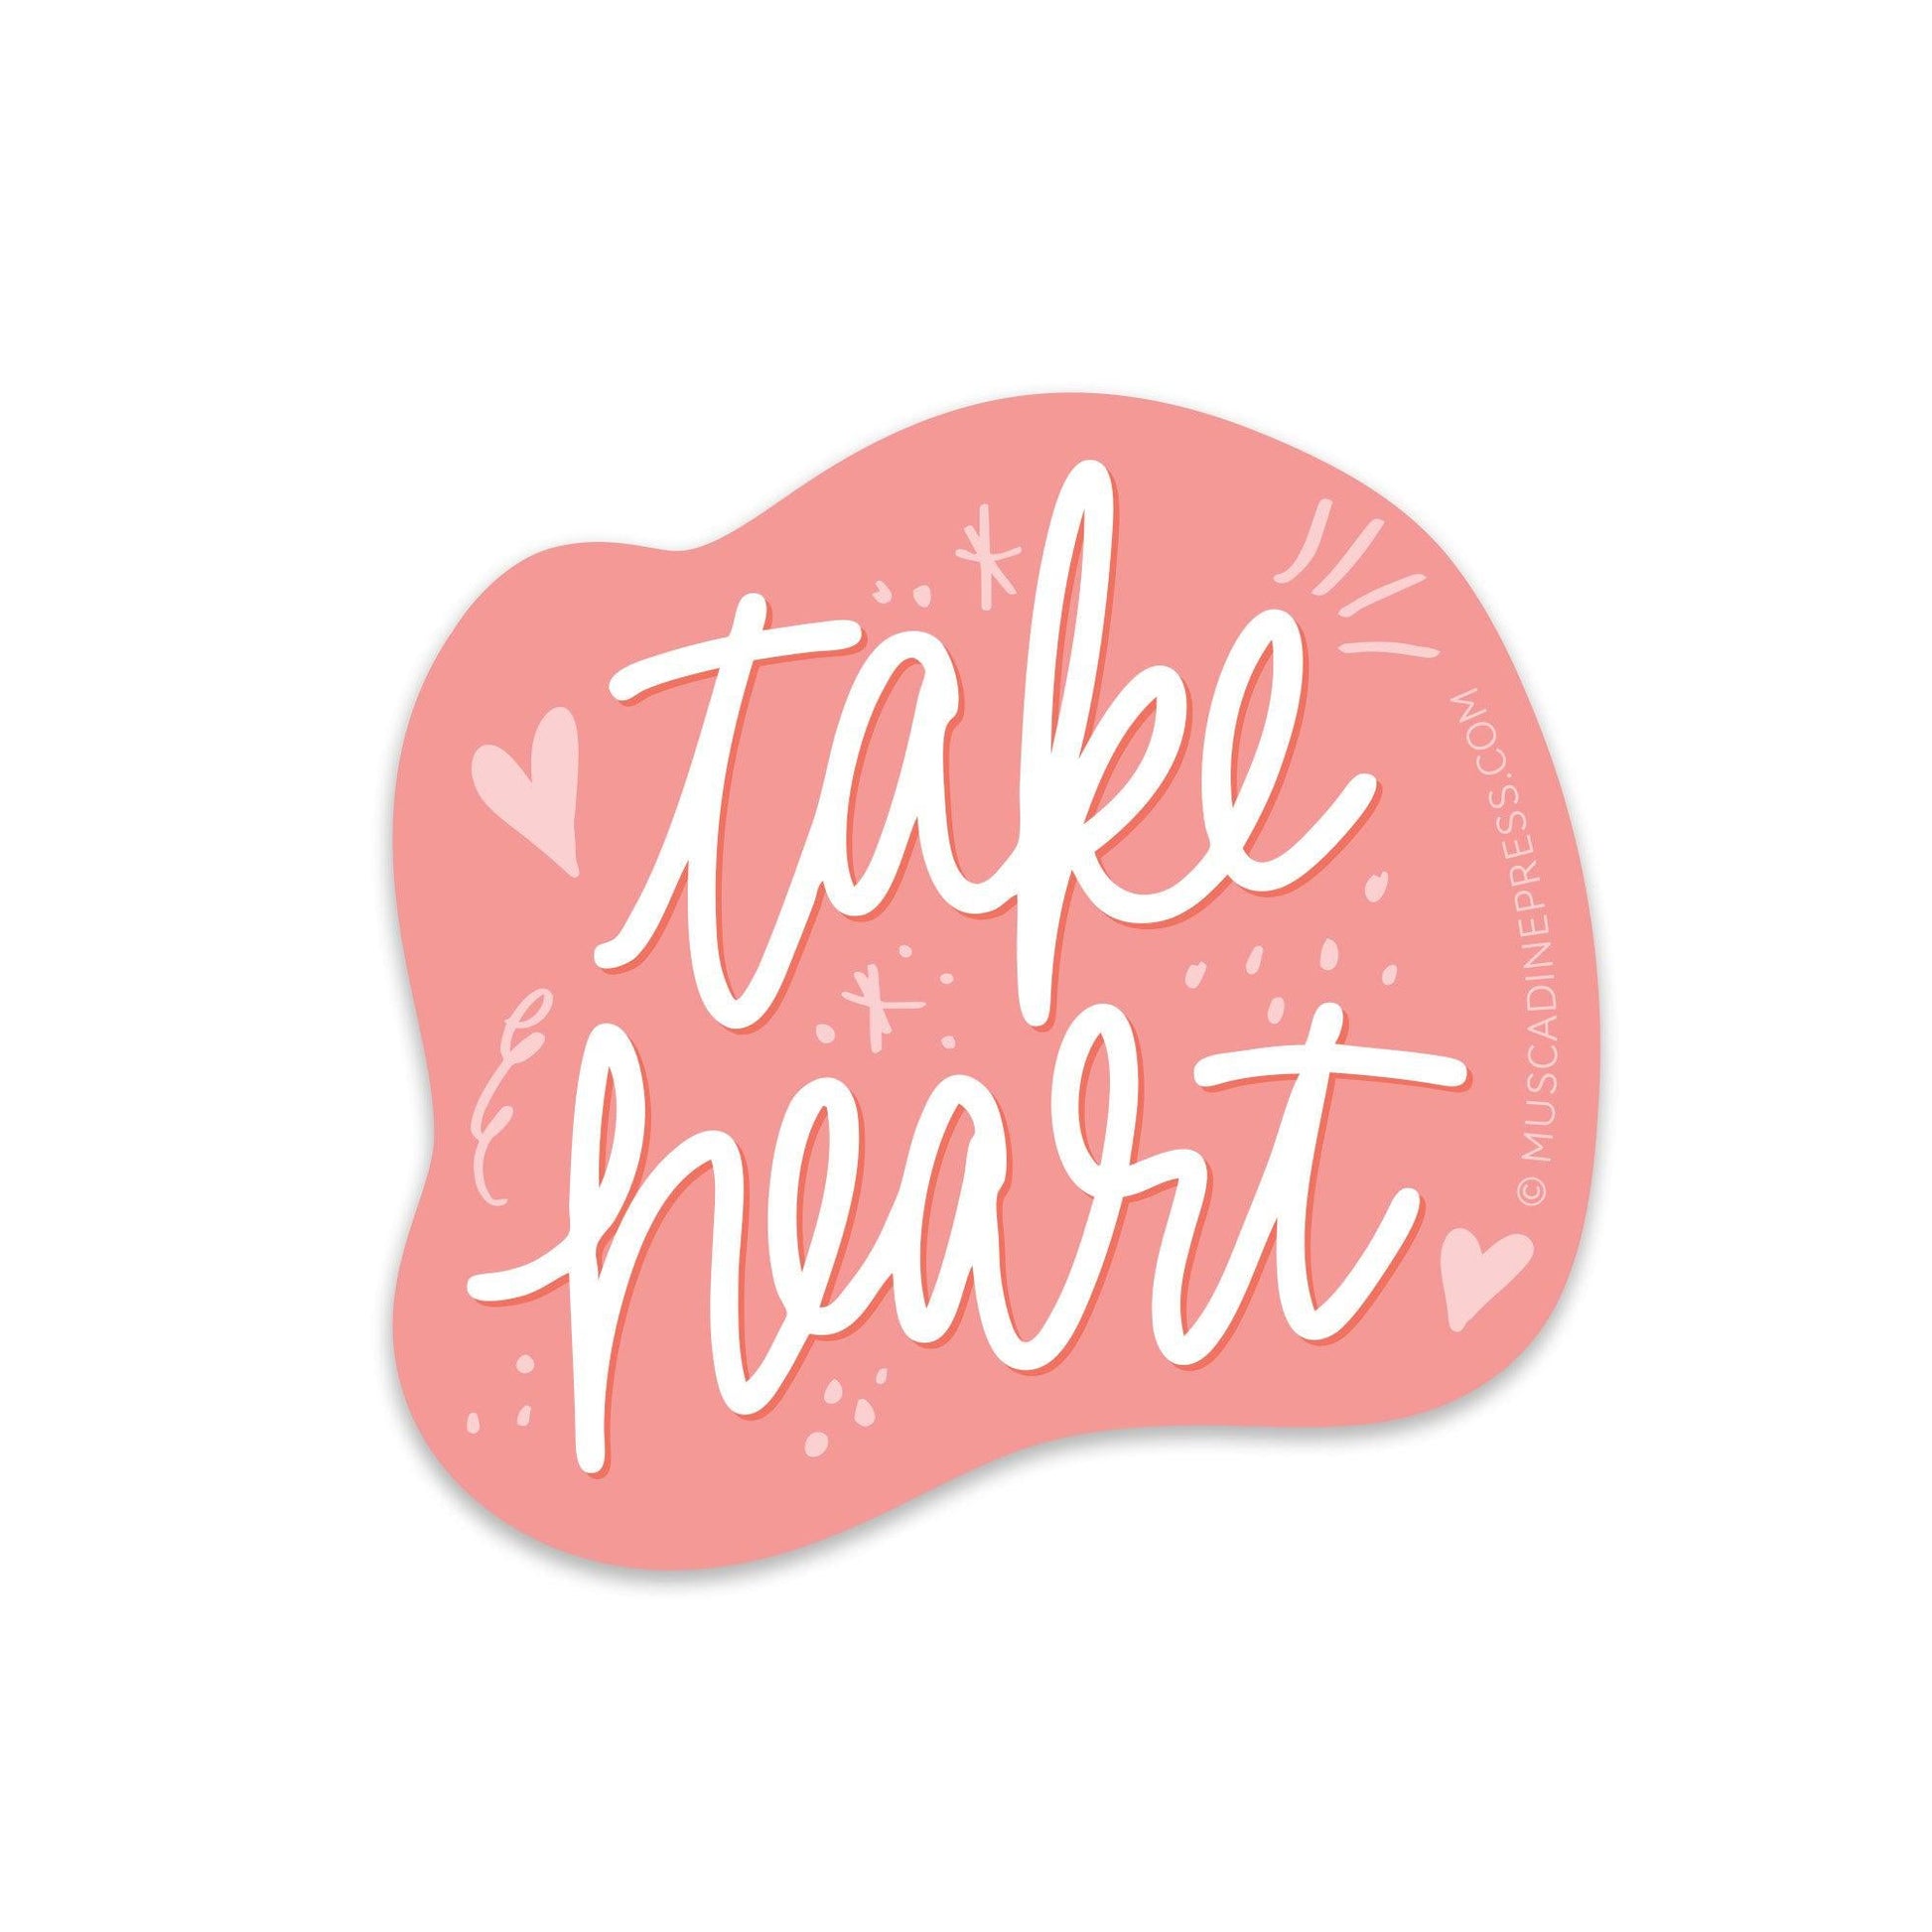 Inspirational Christian Sticker, Take Heart